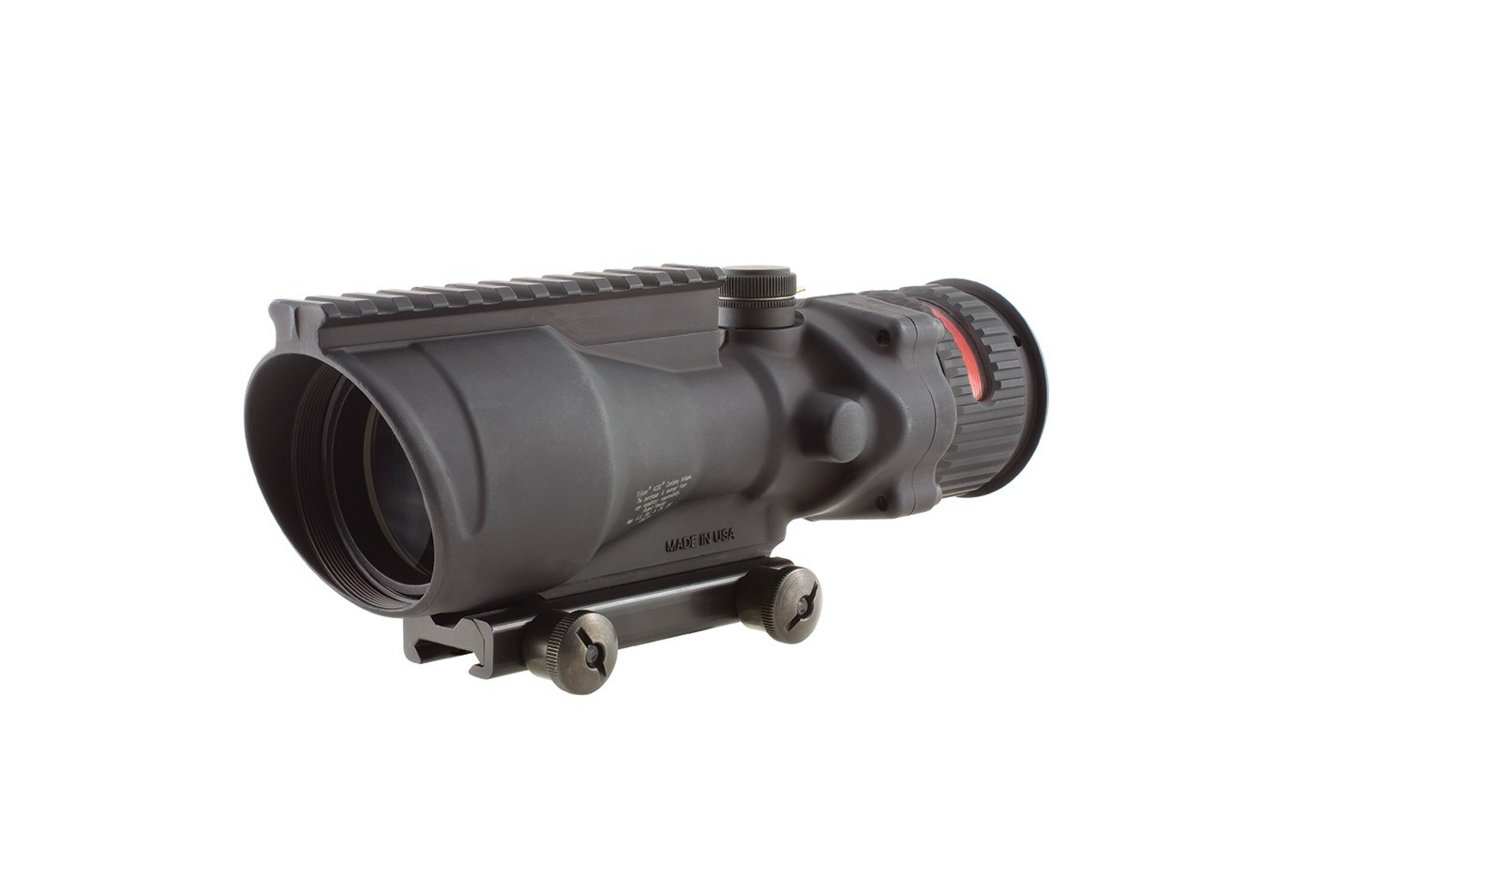 ACOG 6x48 BAC Riflescope w/ Red Chevron Reticle - .223/5.56 BDC
Trijicon